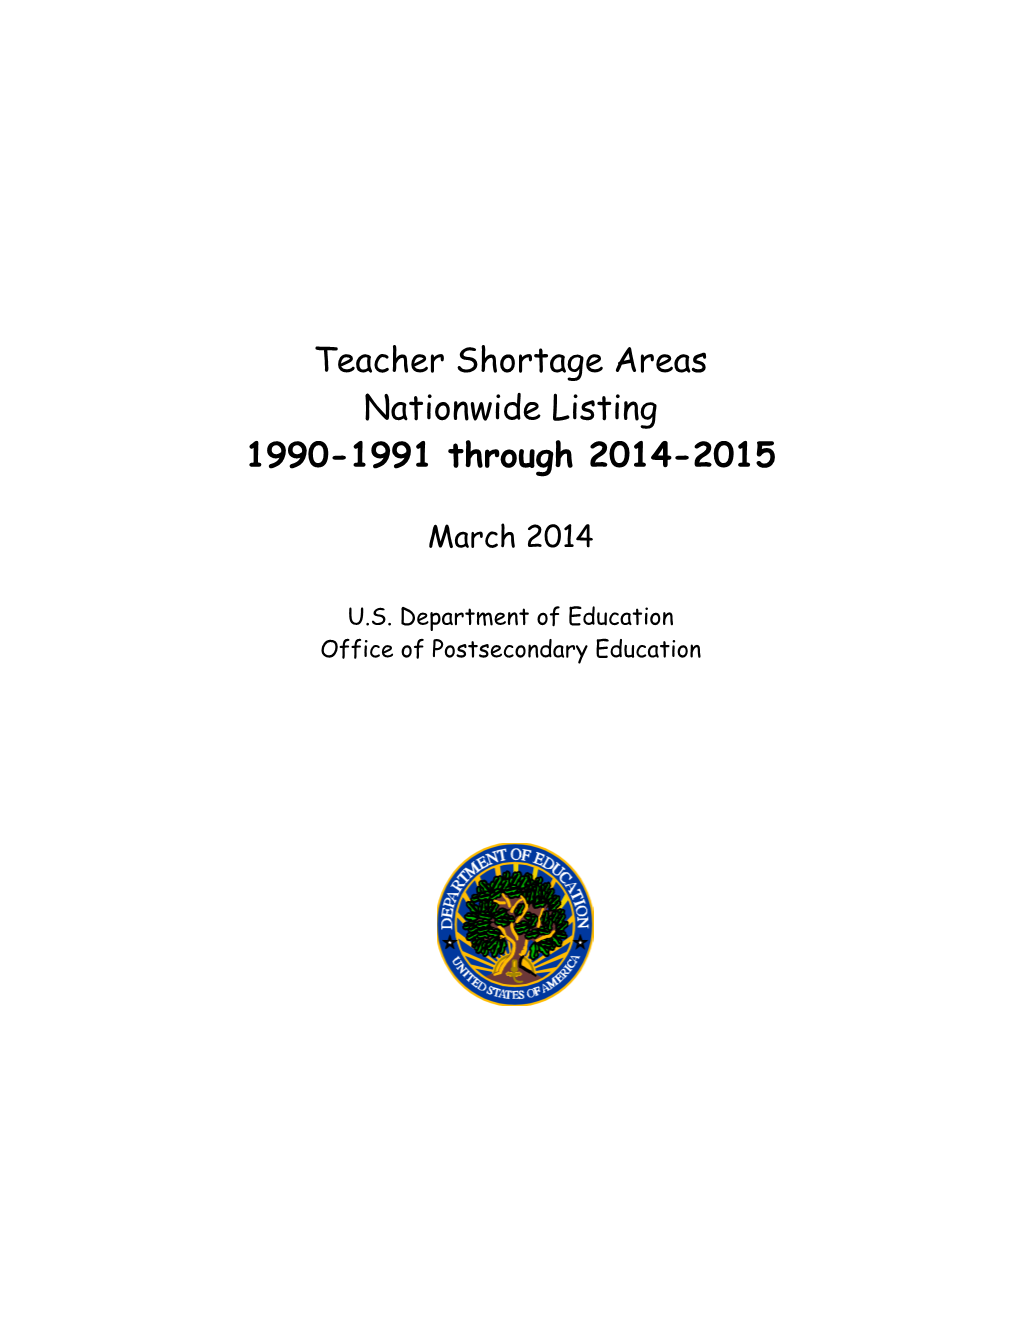 Teacher Shortage Areas Nationwide Listing, 1990-1991 Through 2014-2015